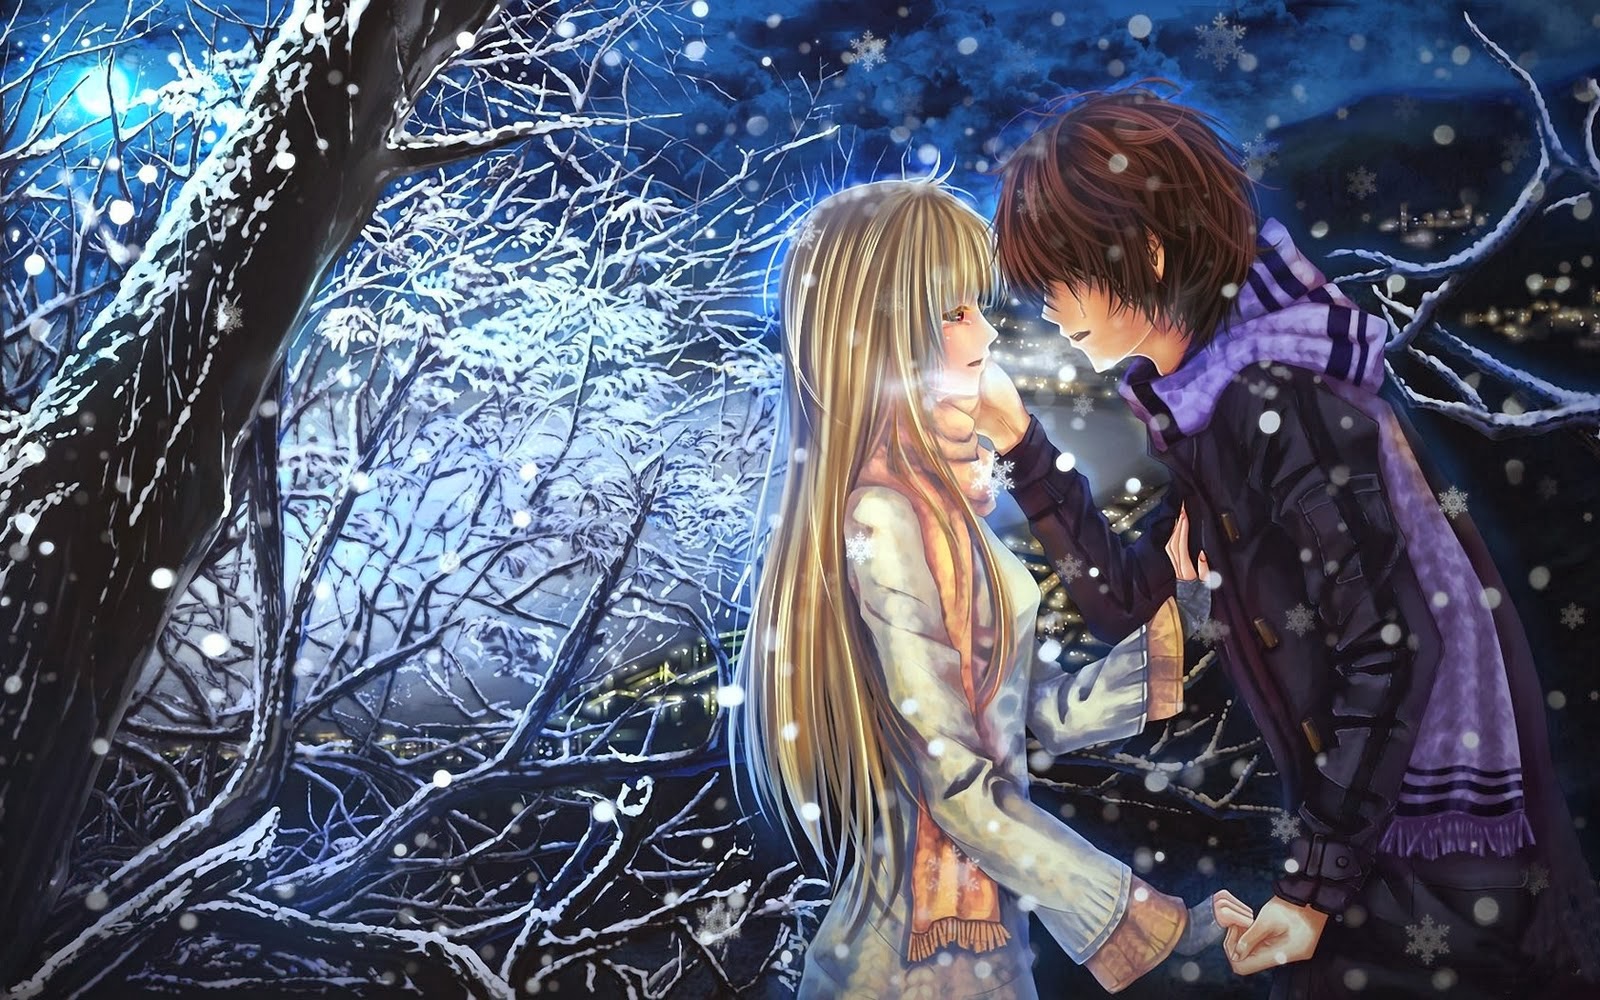 9 Images Anime hug couple cute romantic feelings affection deep